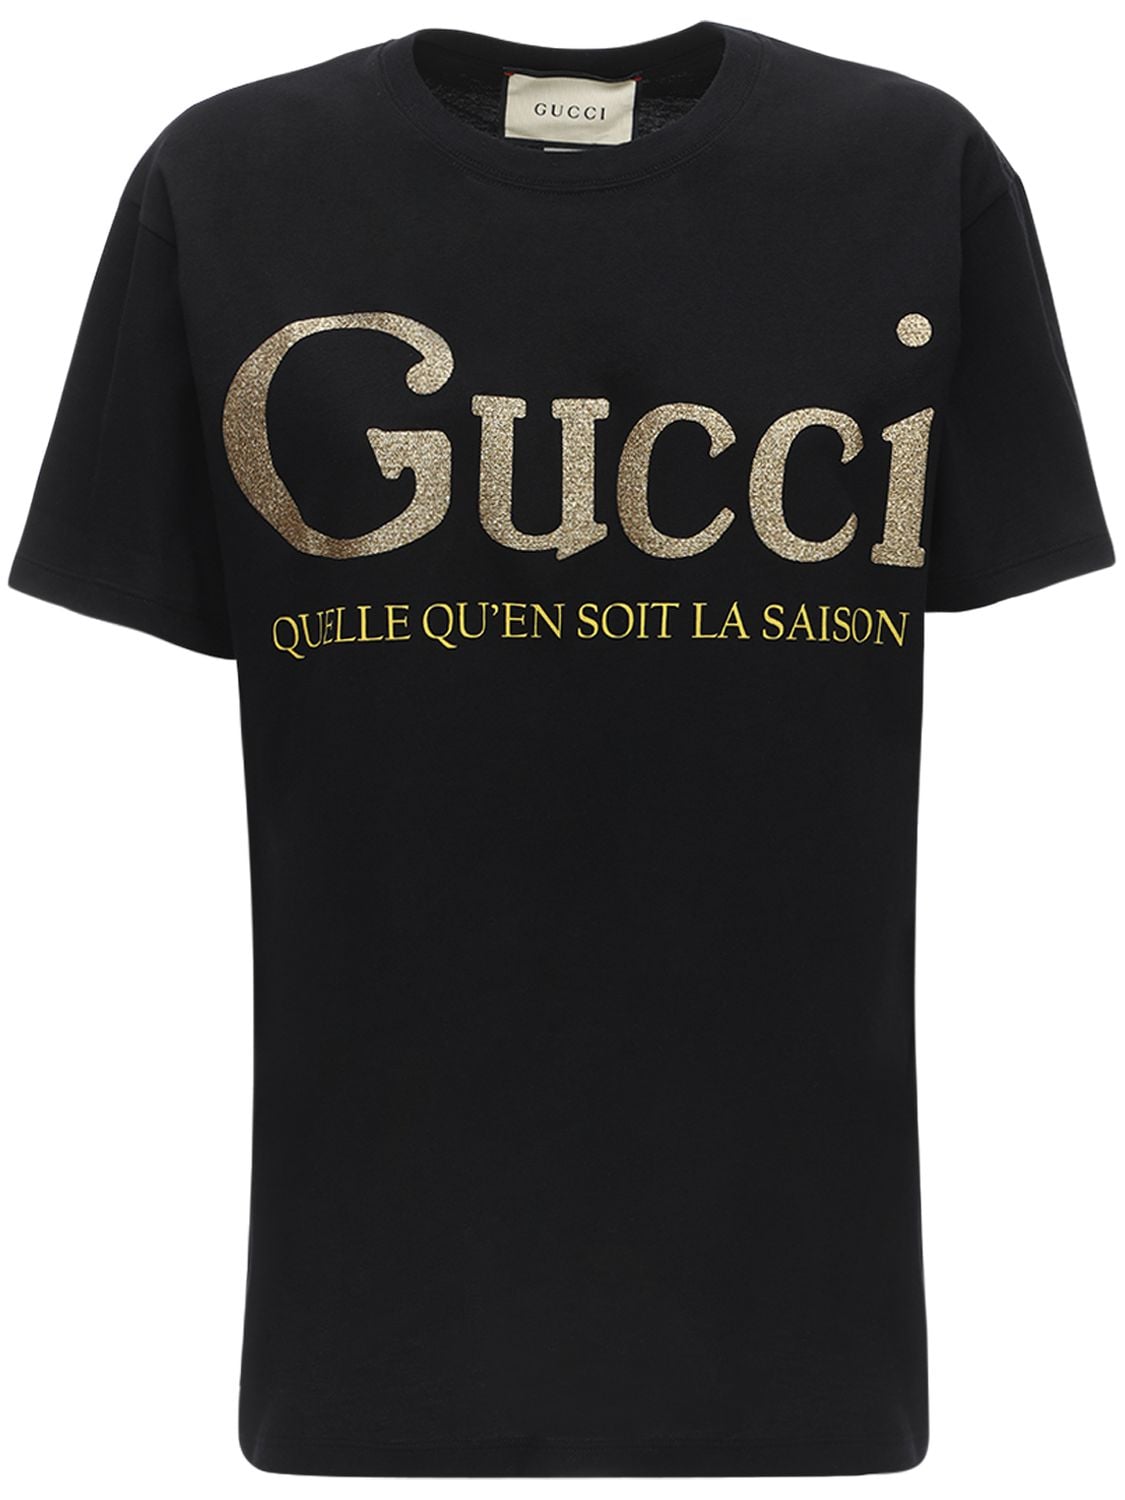 gucci t shirt starting price